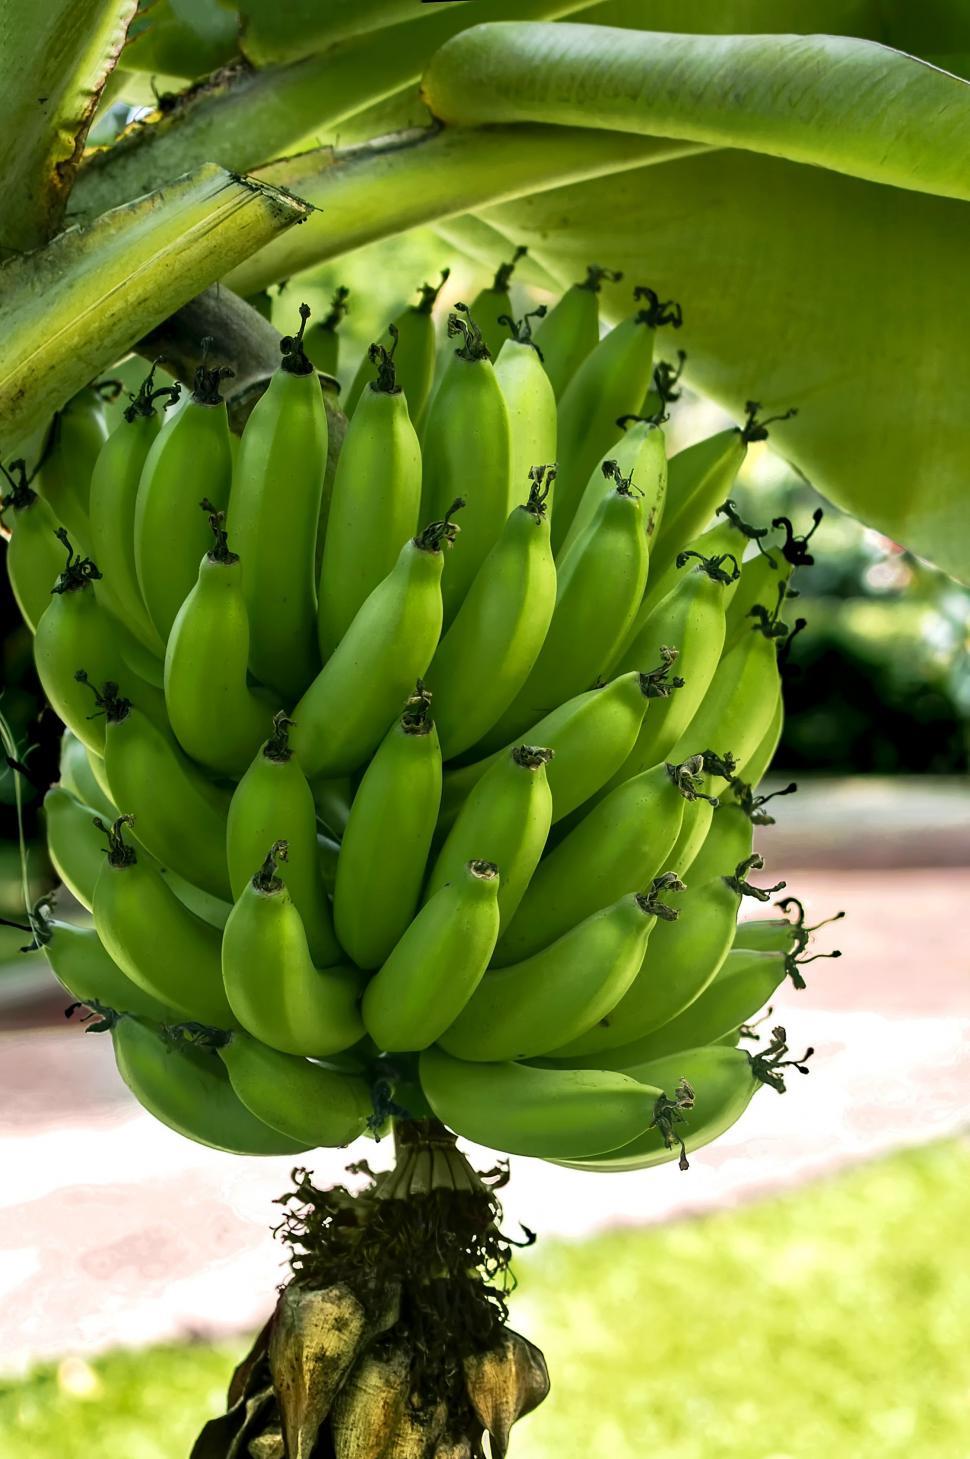 Free Image of Green bananas  